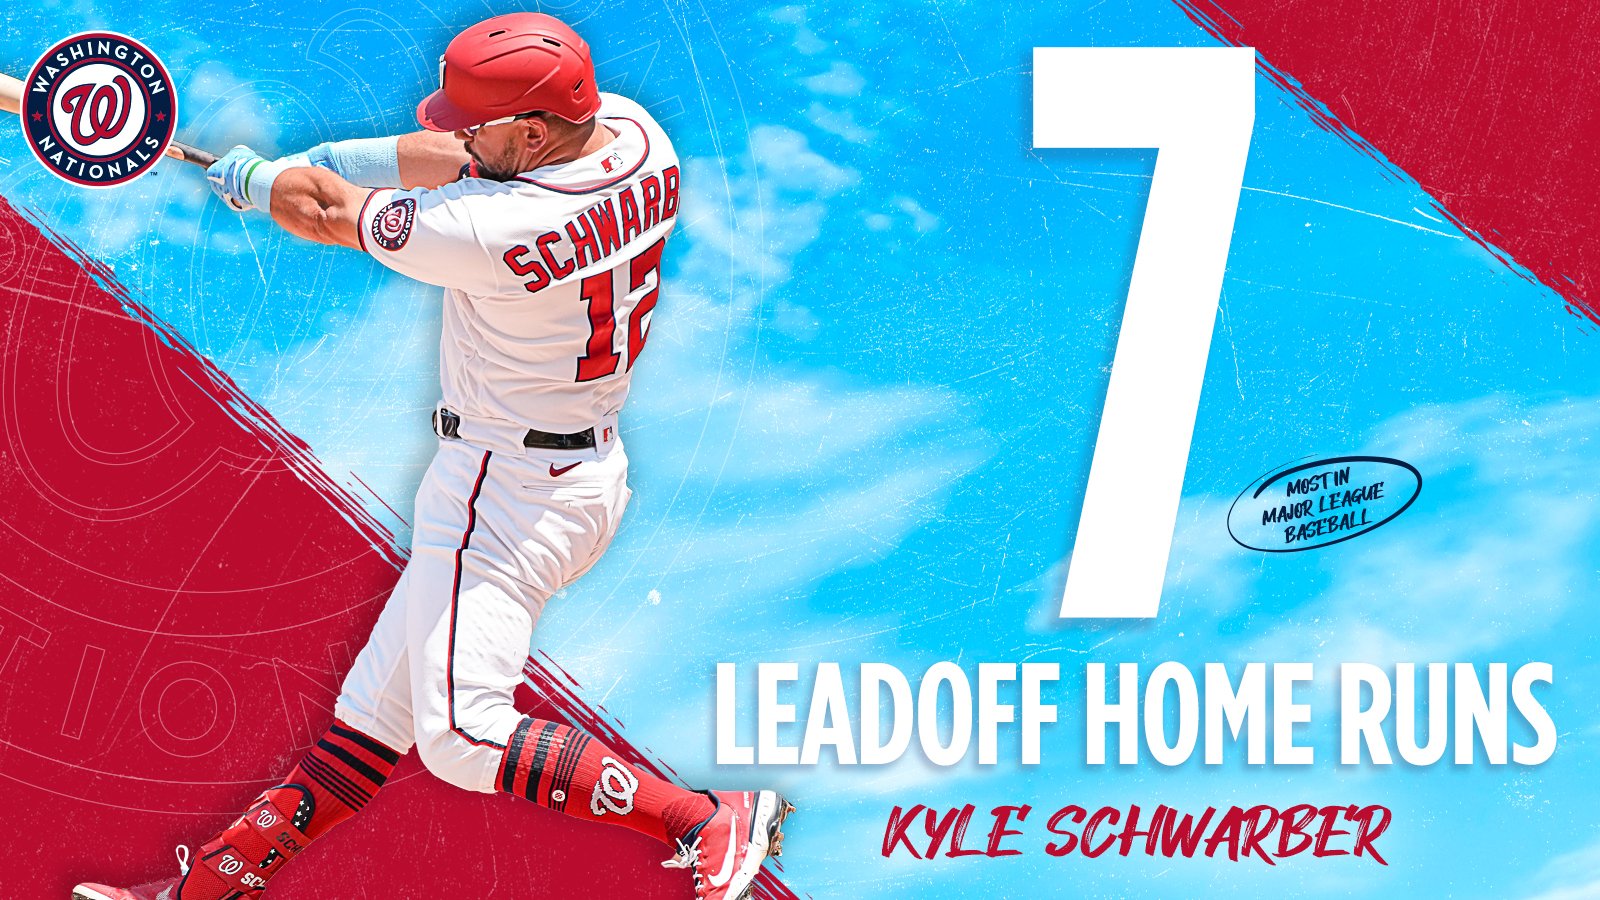 Wawa announces Schwarberfest. Kyle Schwarber hits monster home run.